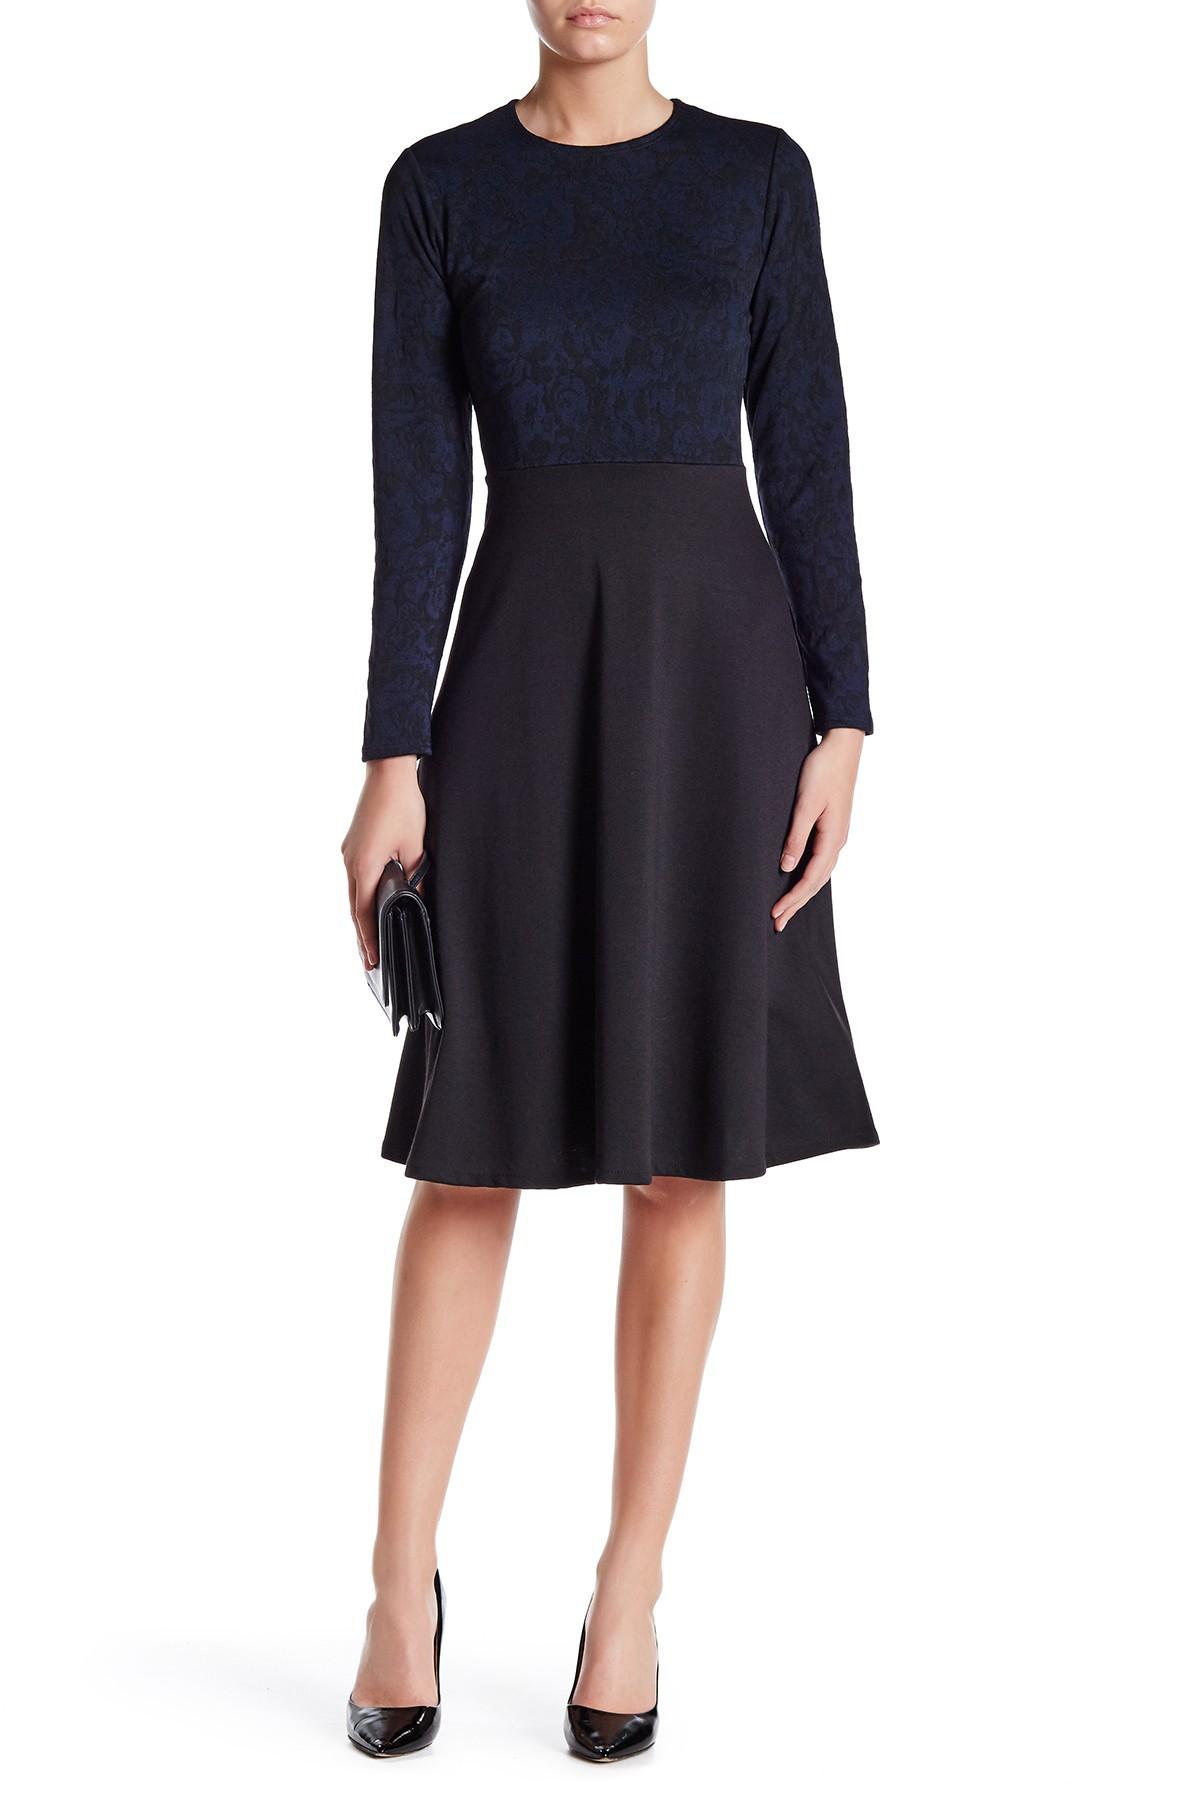 Lyst - Go couture Go Modest Mixed Media Regency Block Dress in Black